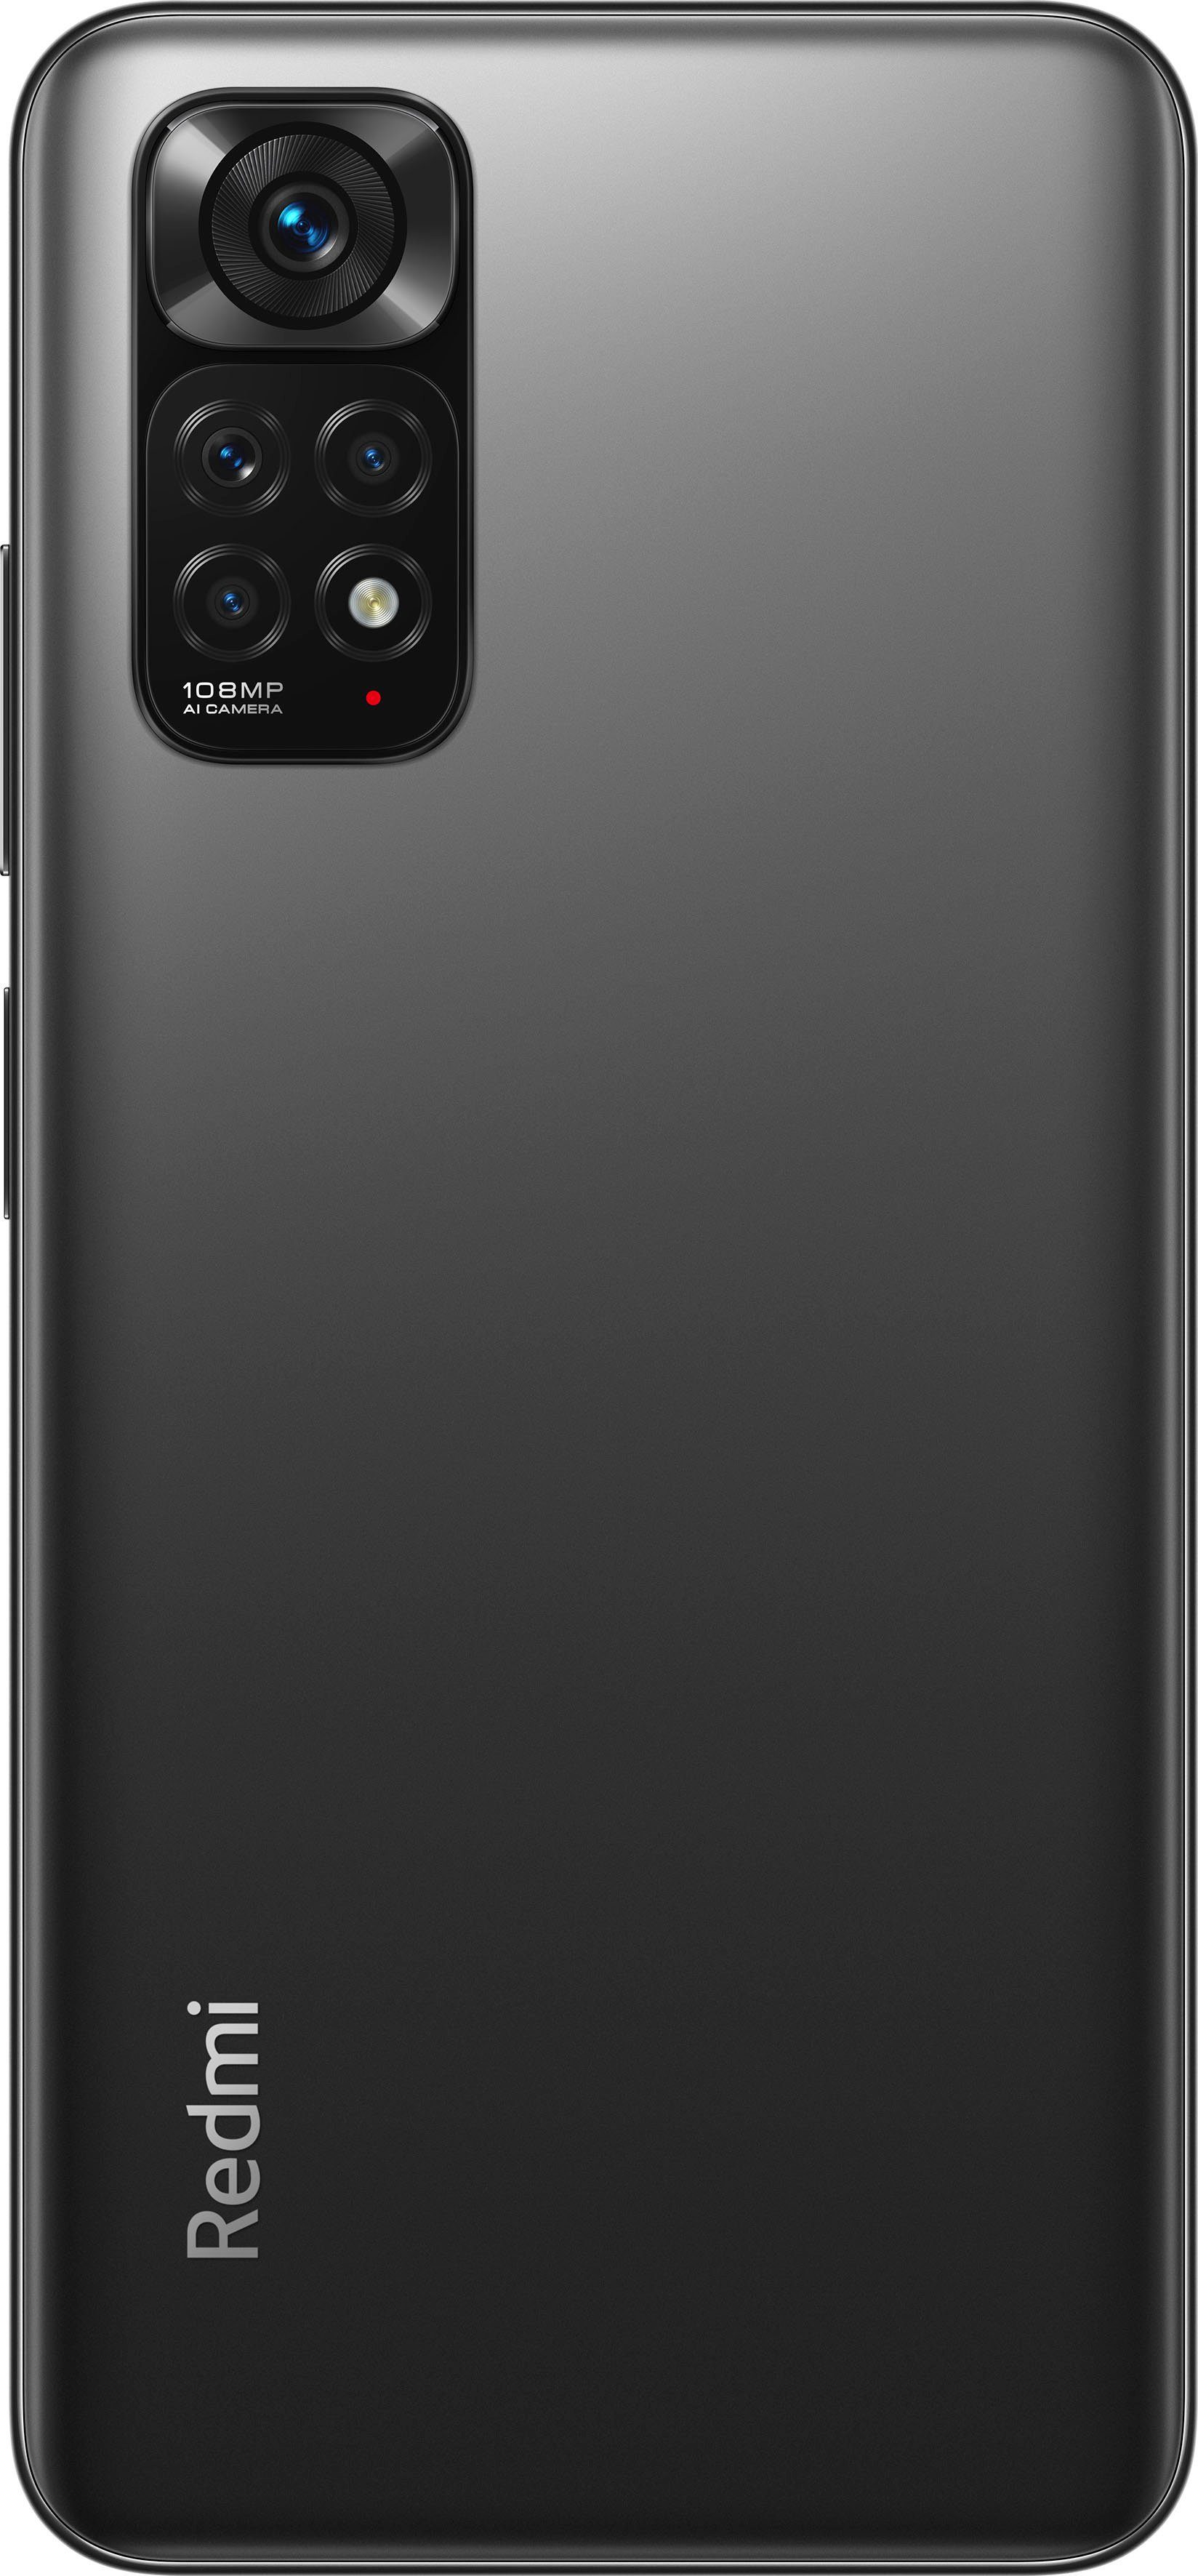 Xiaomi cm/6,43 11S MP 108 Note GB (16,33 Redmi Zoll, Speicherplatz, Smartphone Gray Graphite Kamera) 128